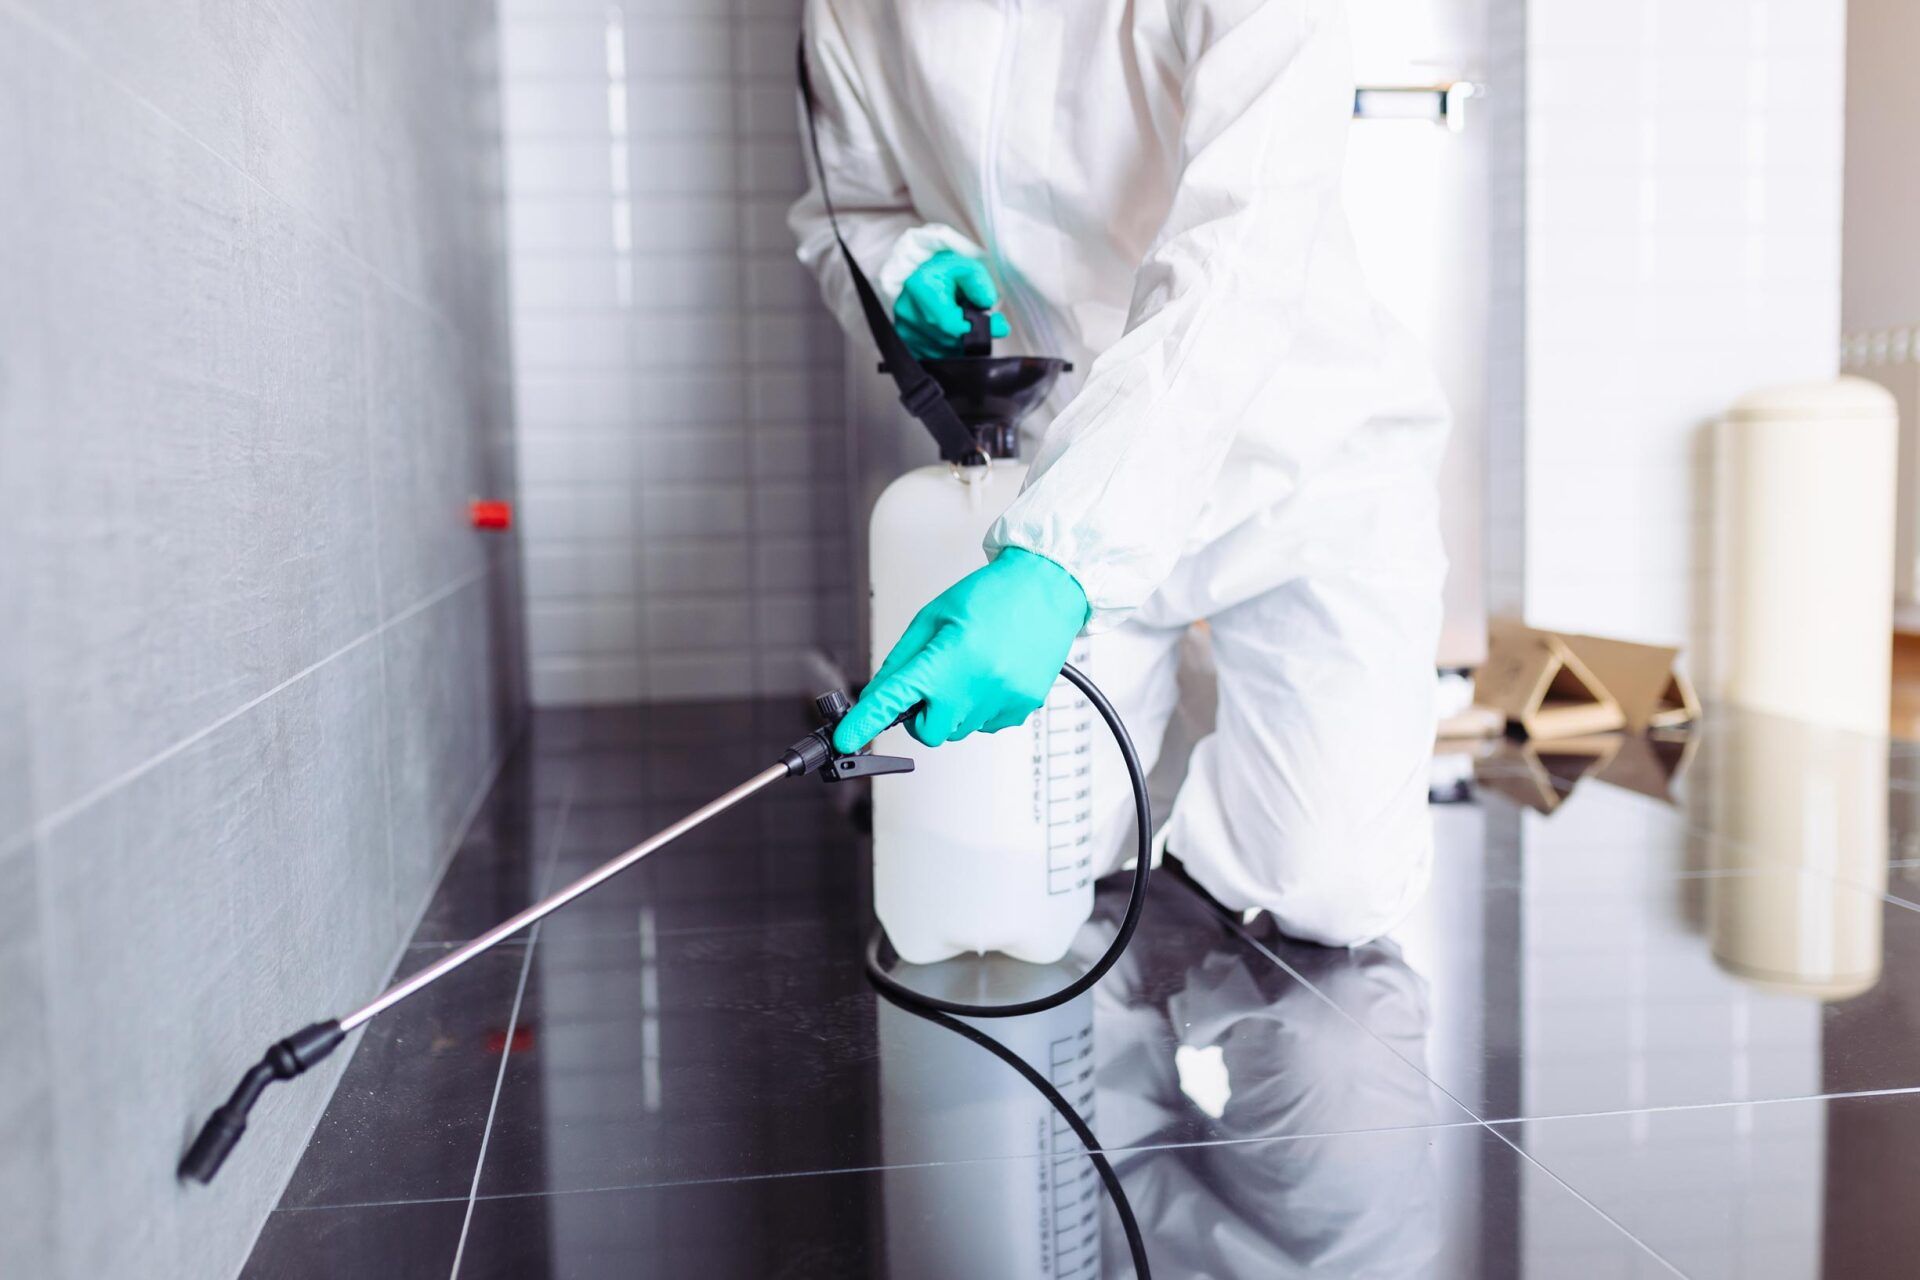 Exterminator Spraying Pesticide — Pest Control in Bowral, NSW